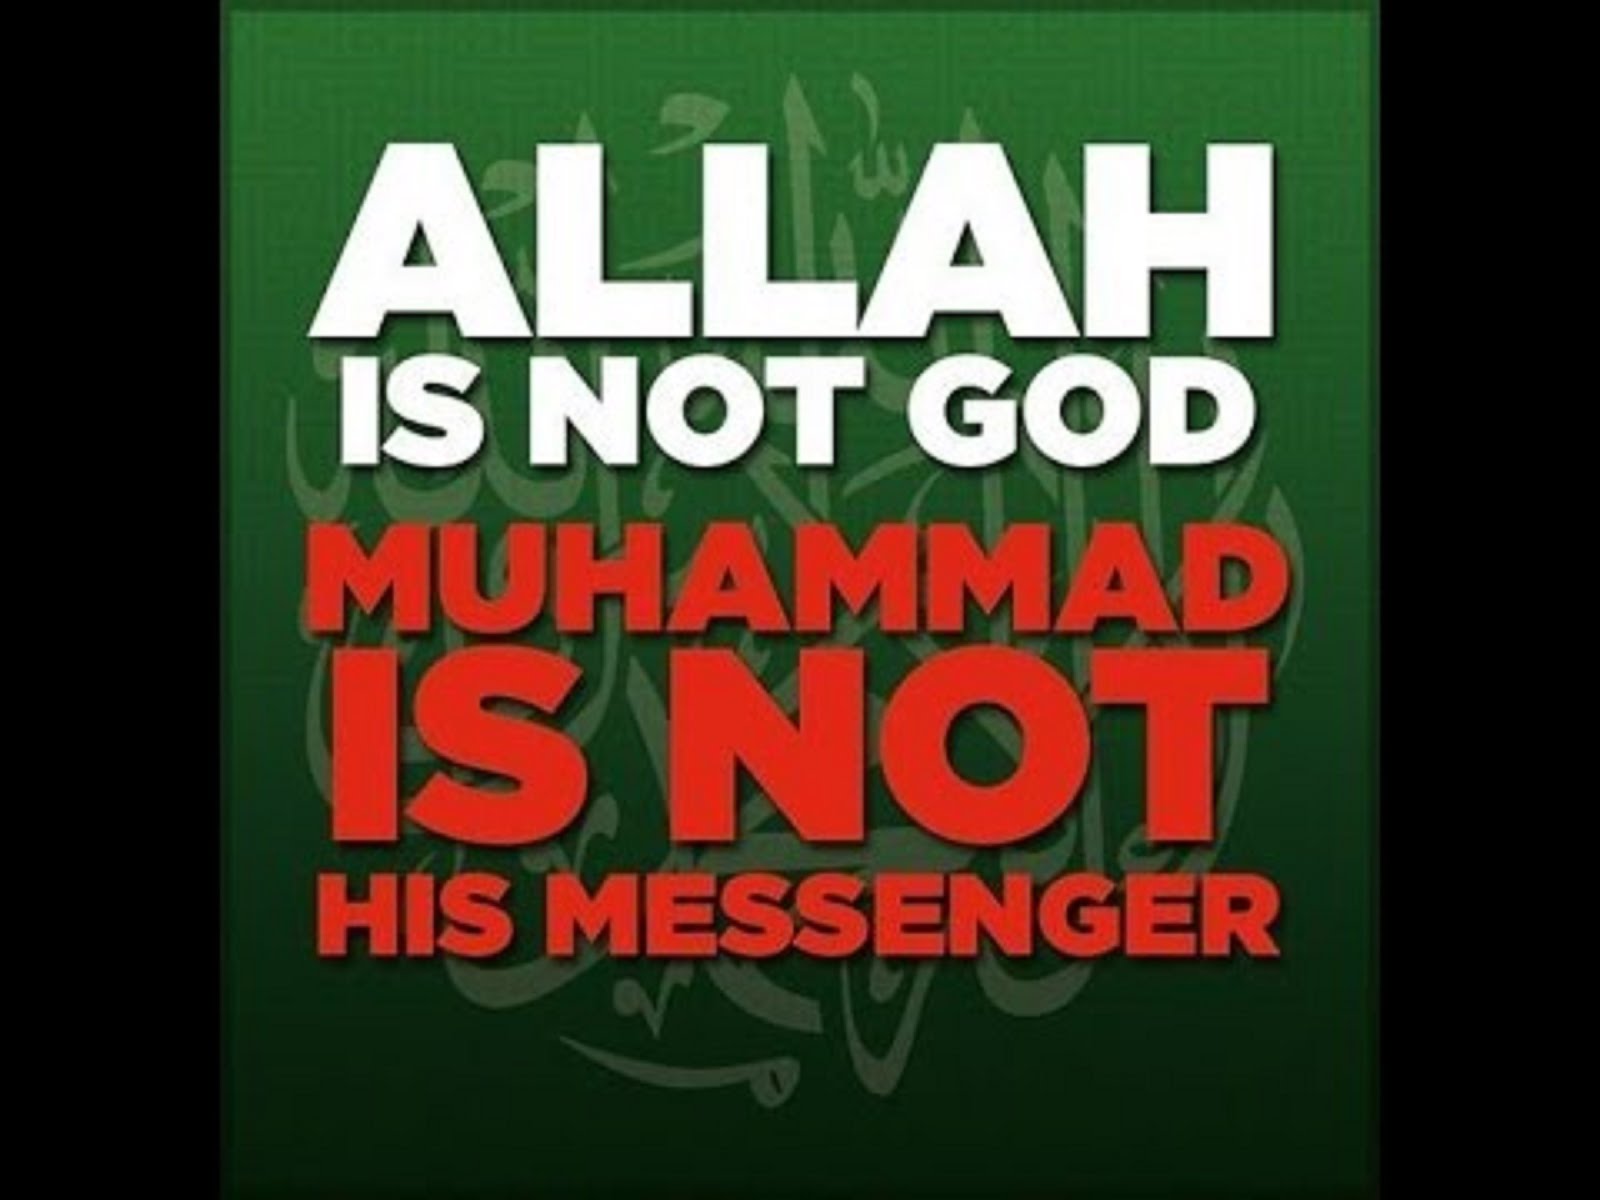 ALLAH IS NOT GOD